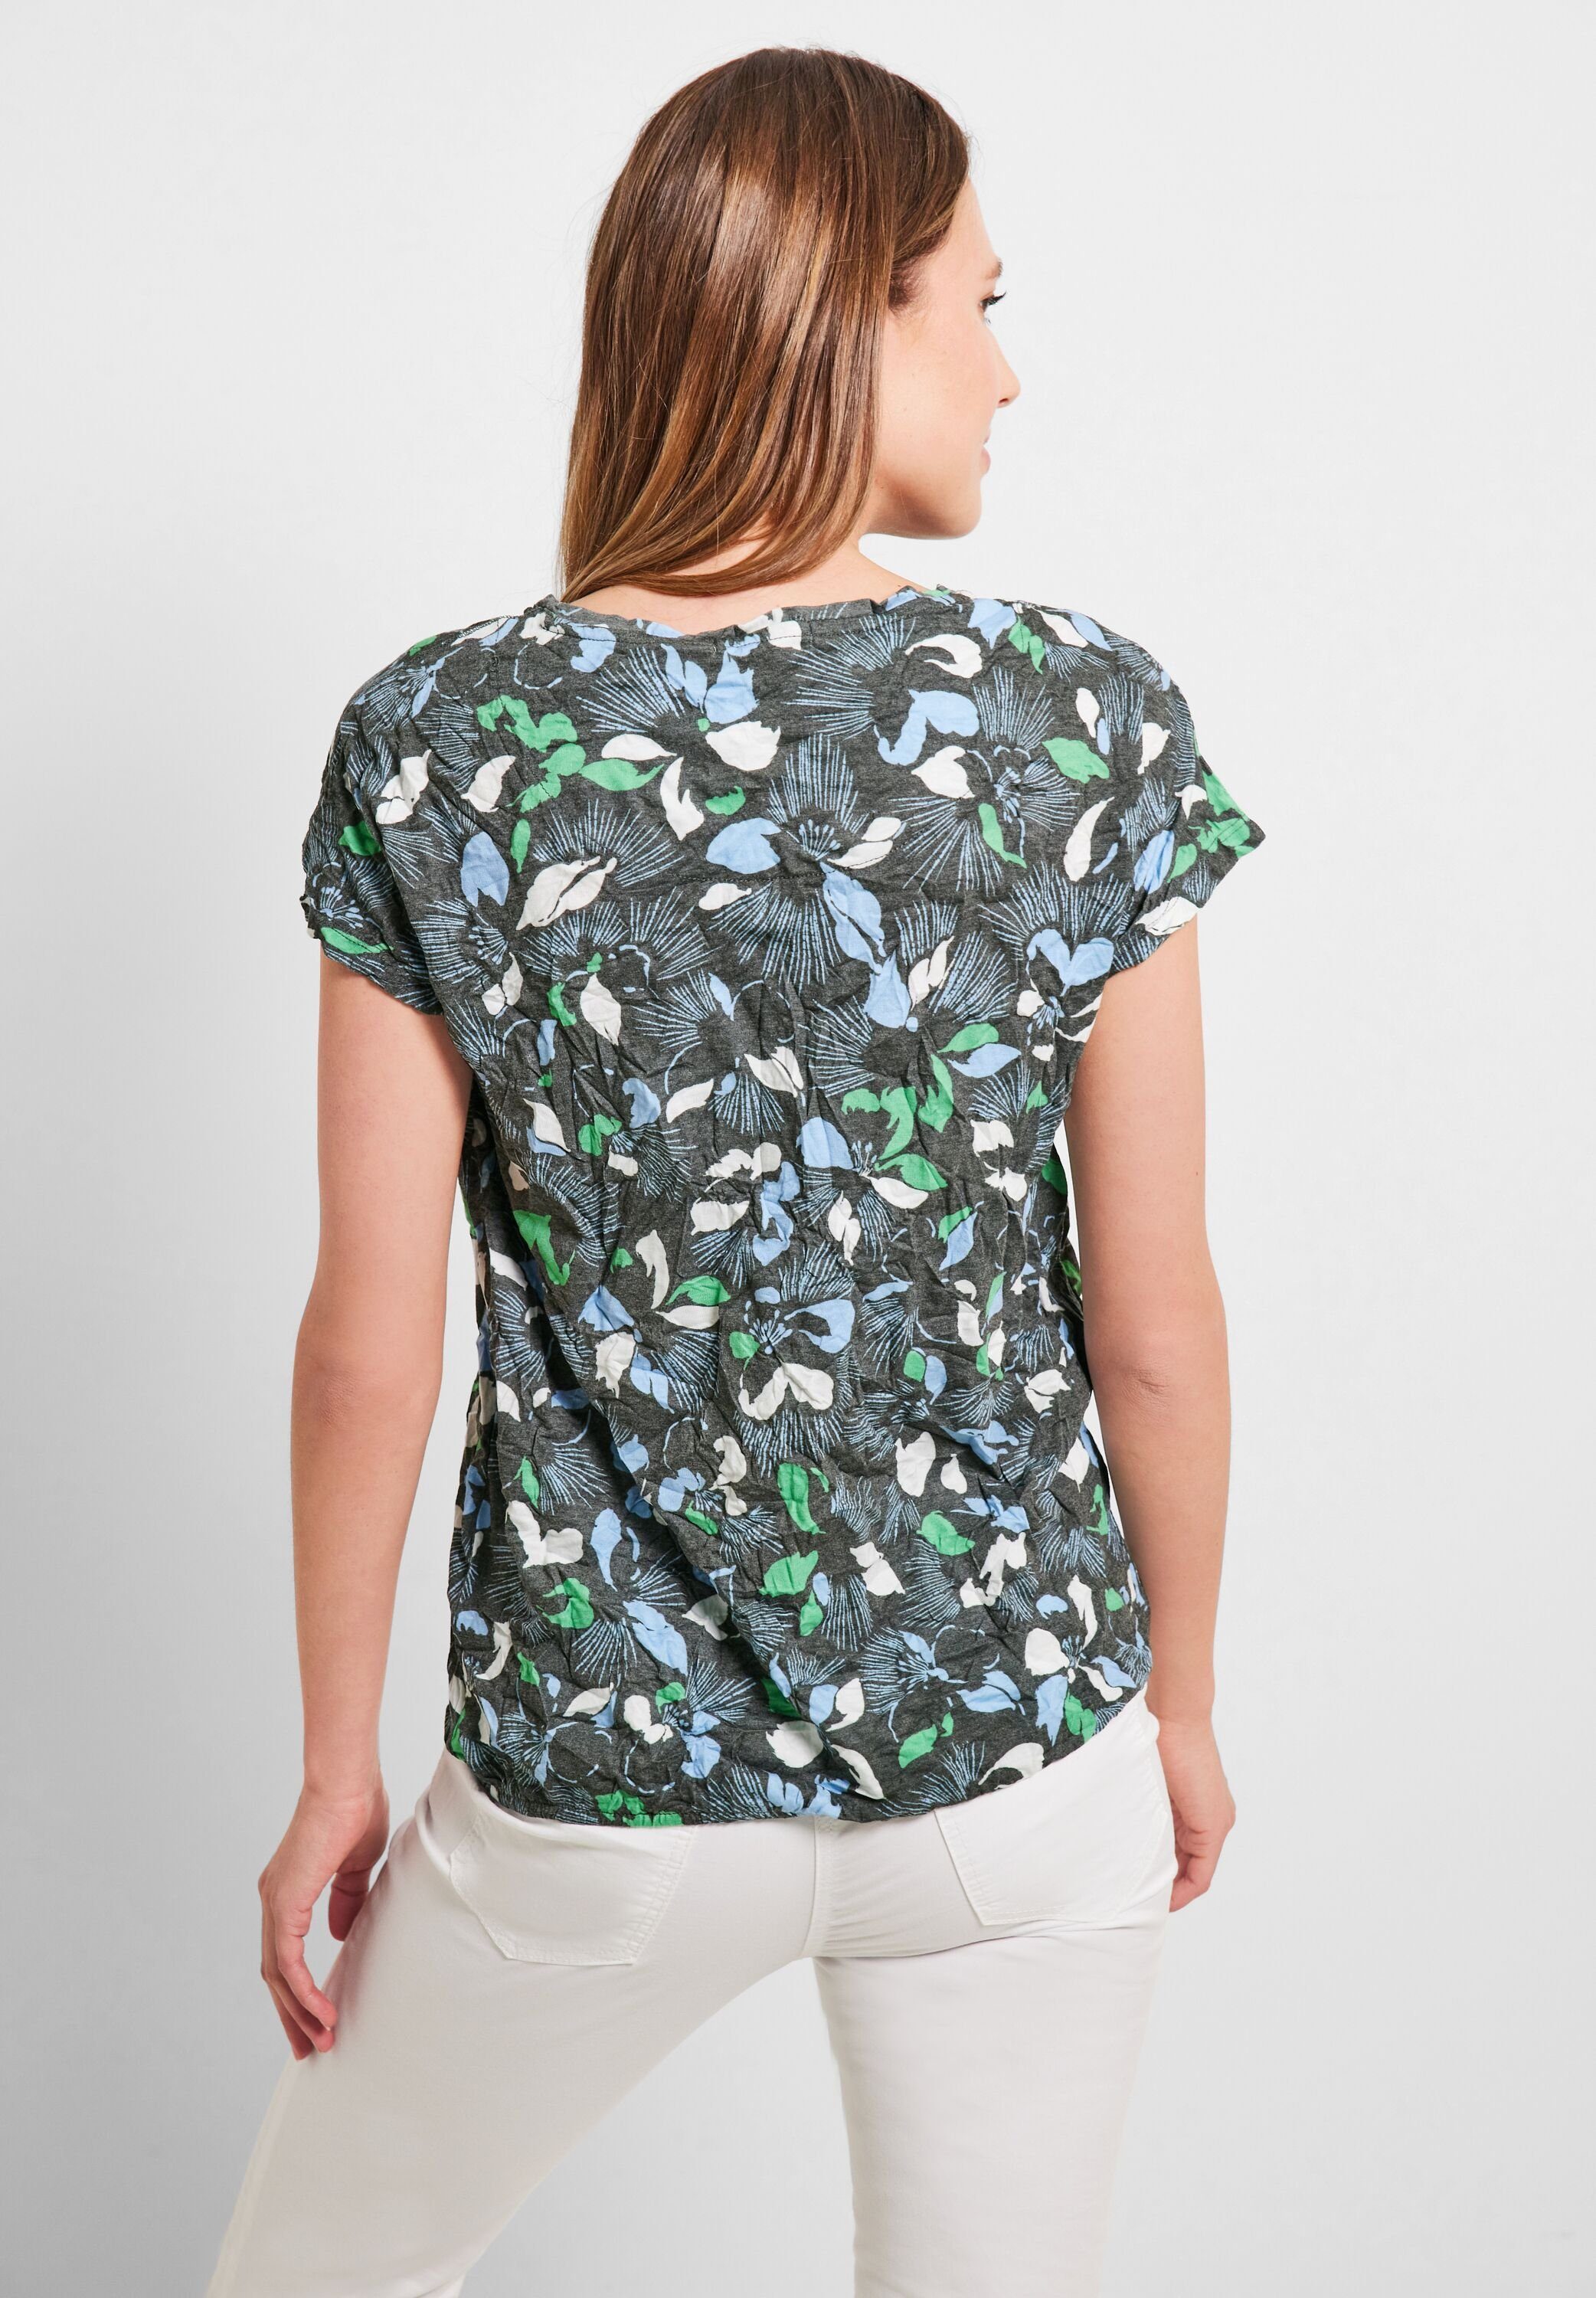 Cecil easy Print-Shirt softem aus Materialmix khaki